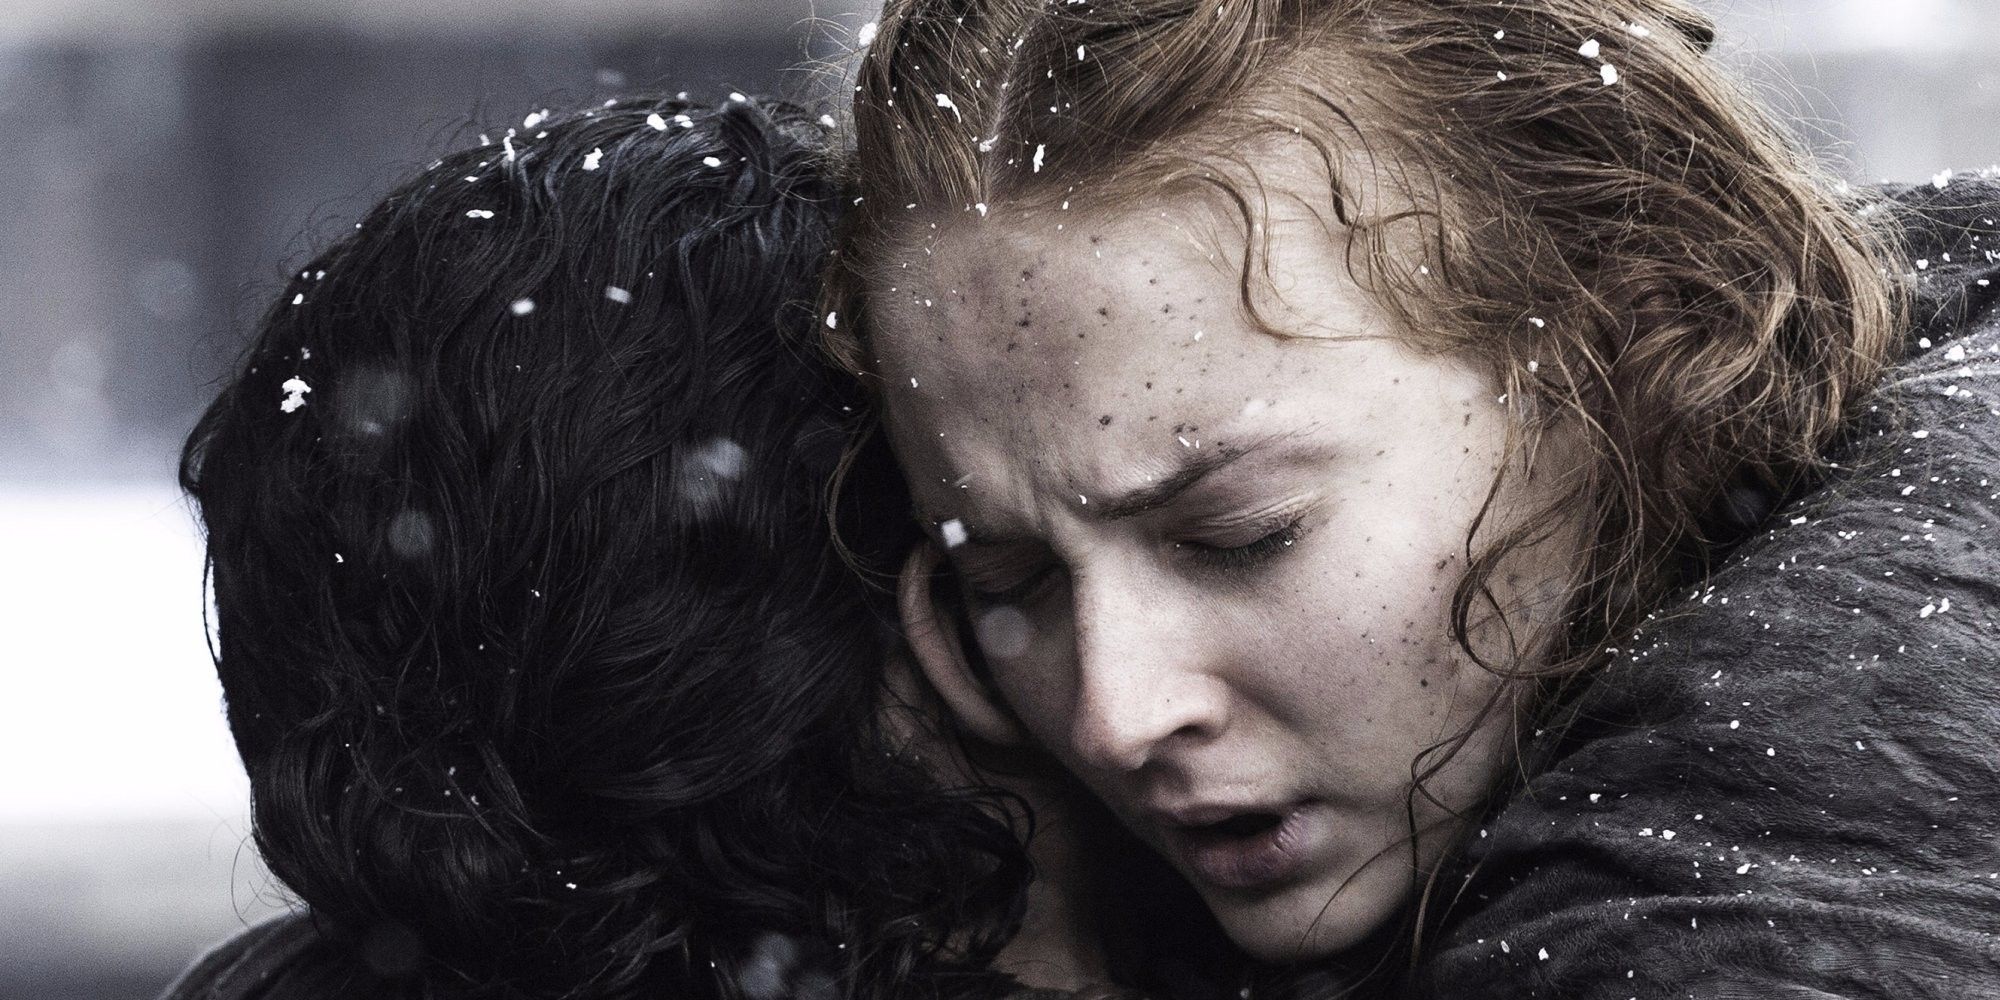 Sophie Turner as Sansa Stark and Isaac Hempstead Wright as Bran Stark in Game of Thrones